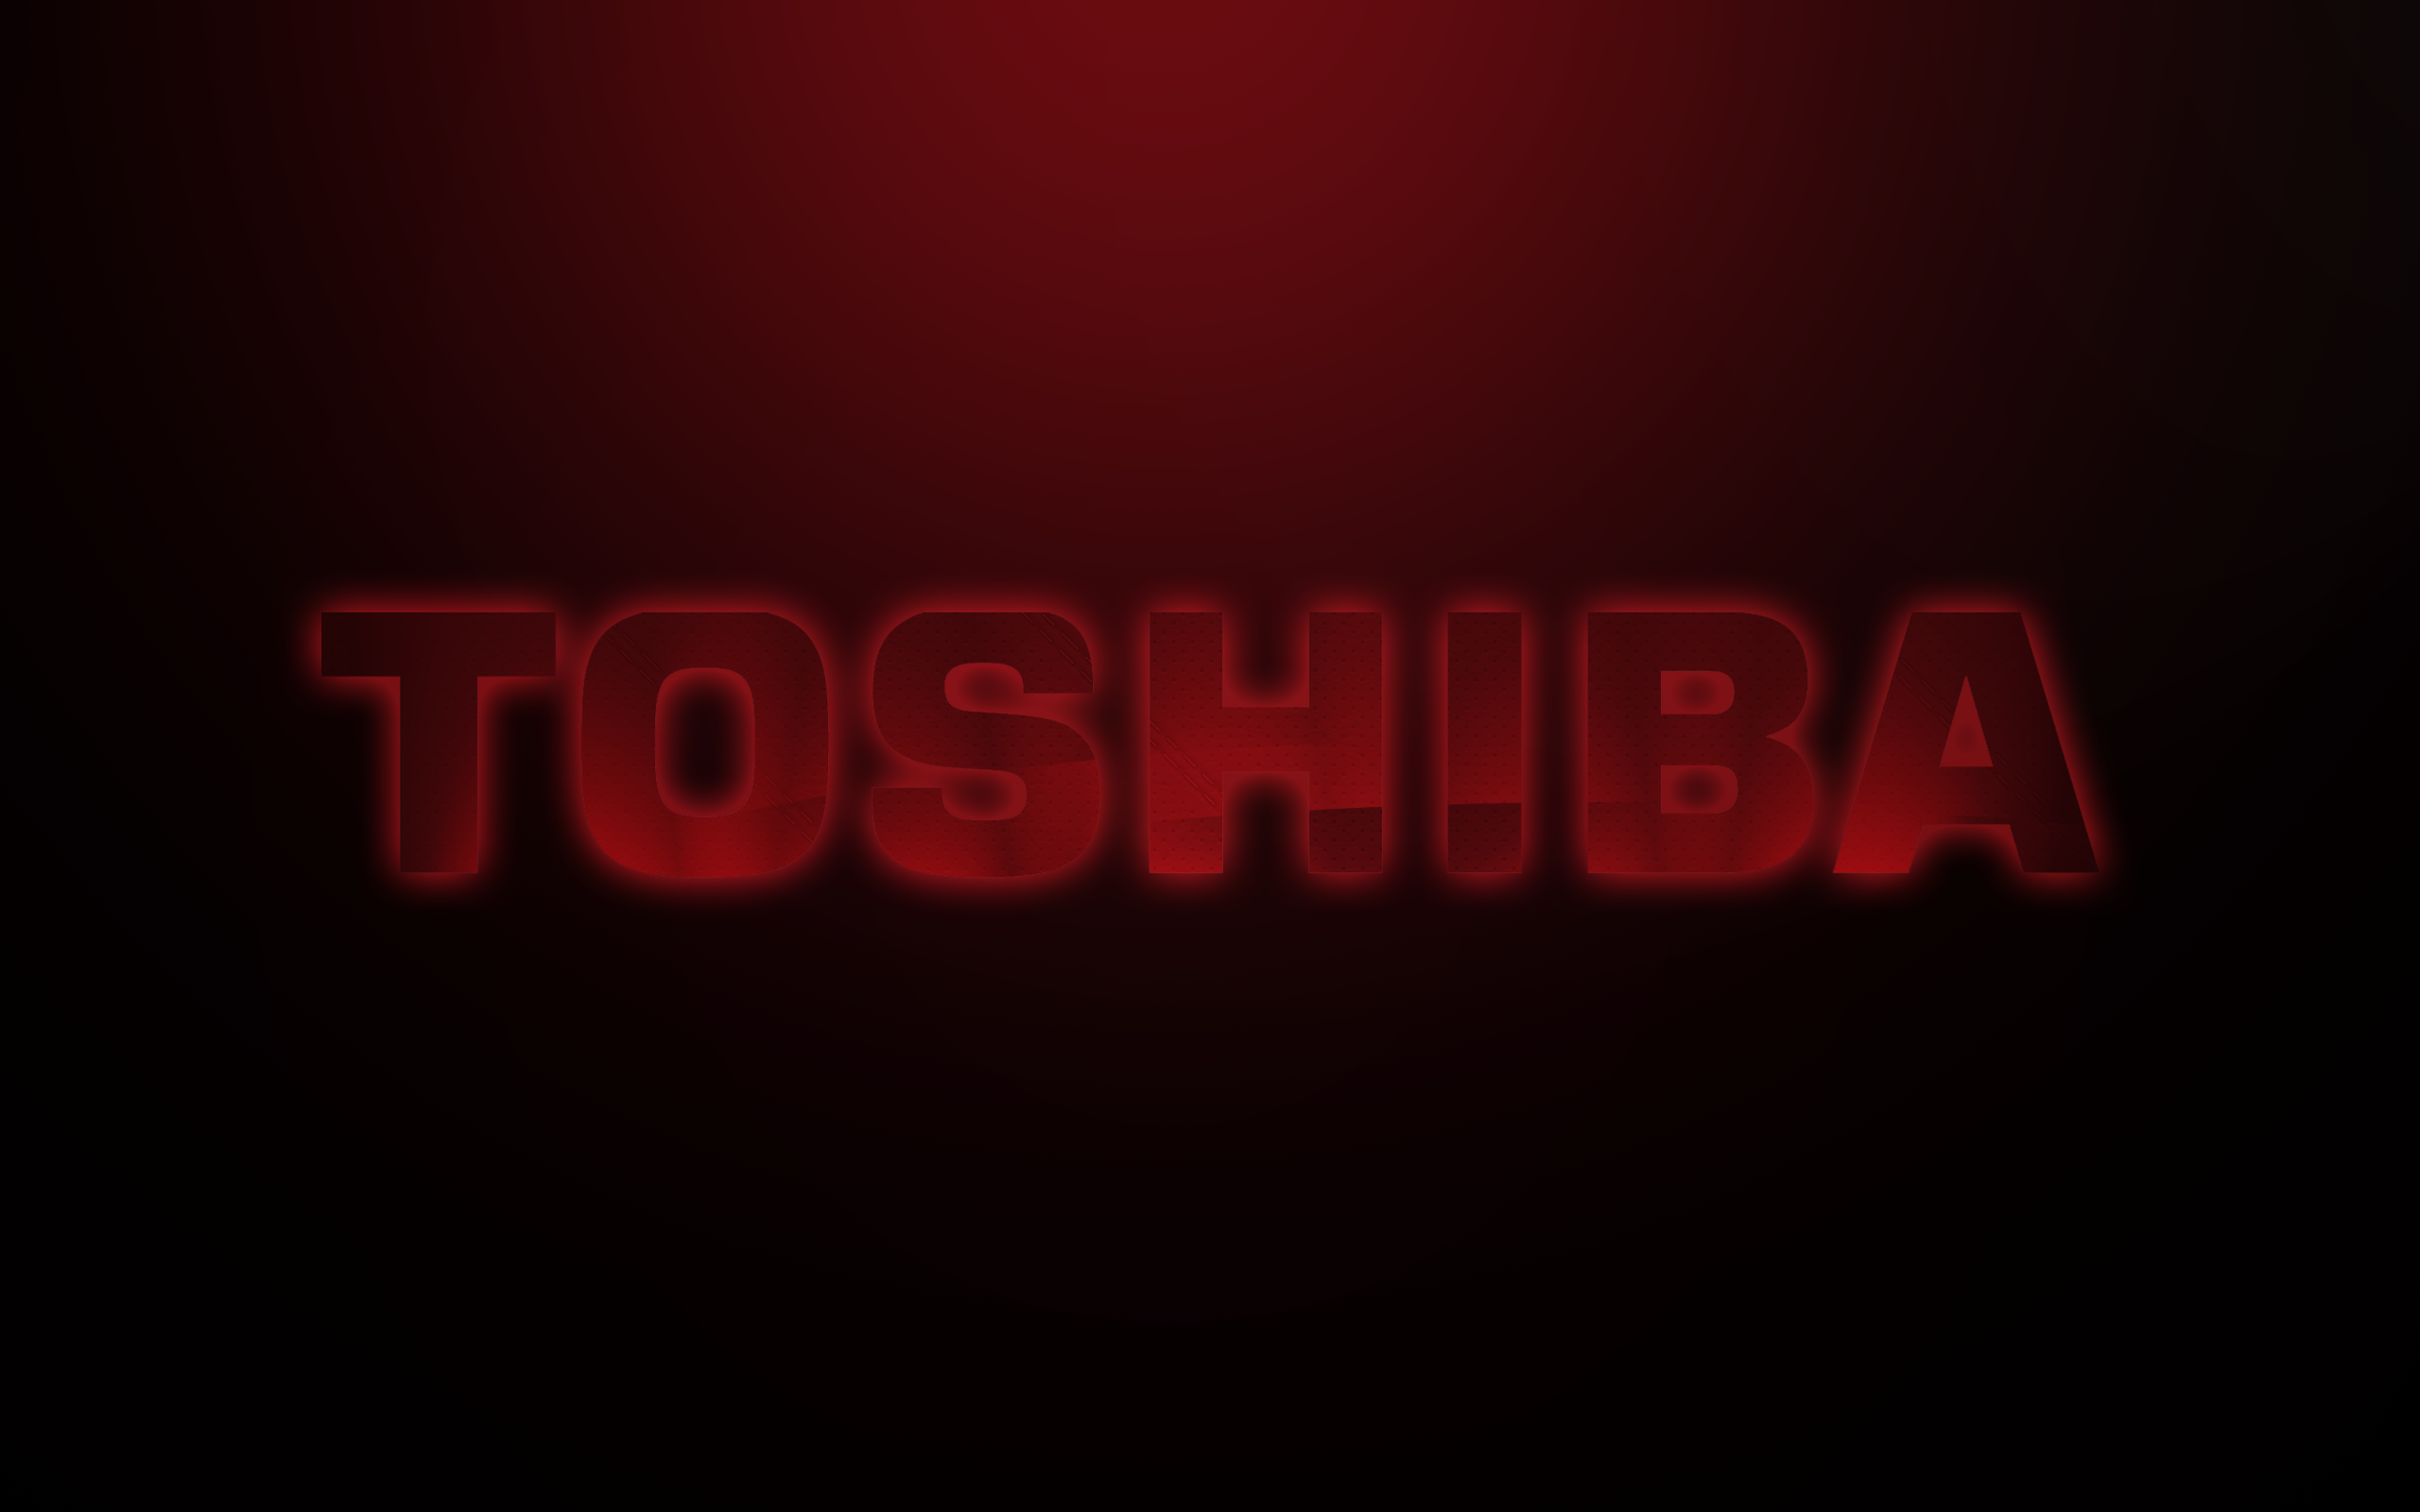 Toshiba Desktop Backgrounds - Wallpaper Cave